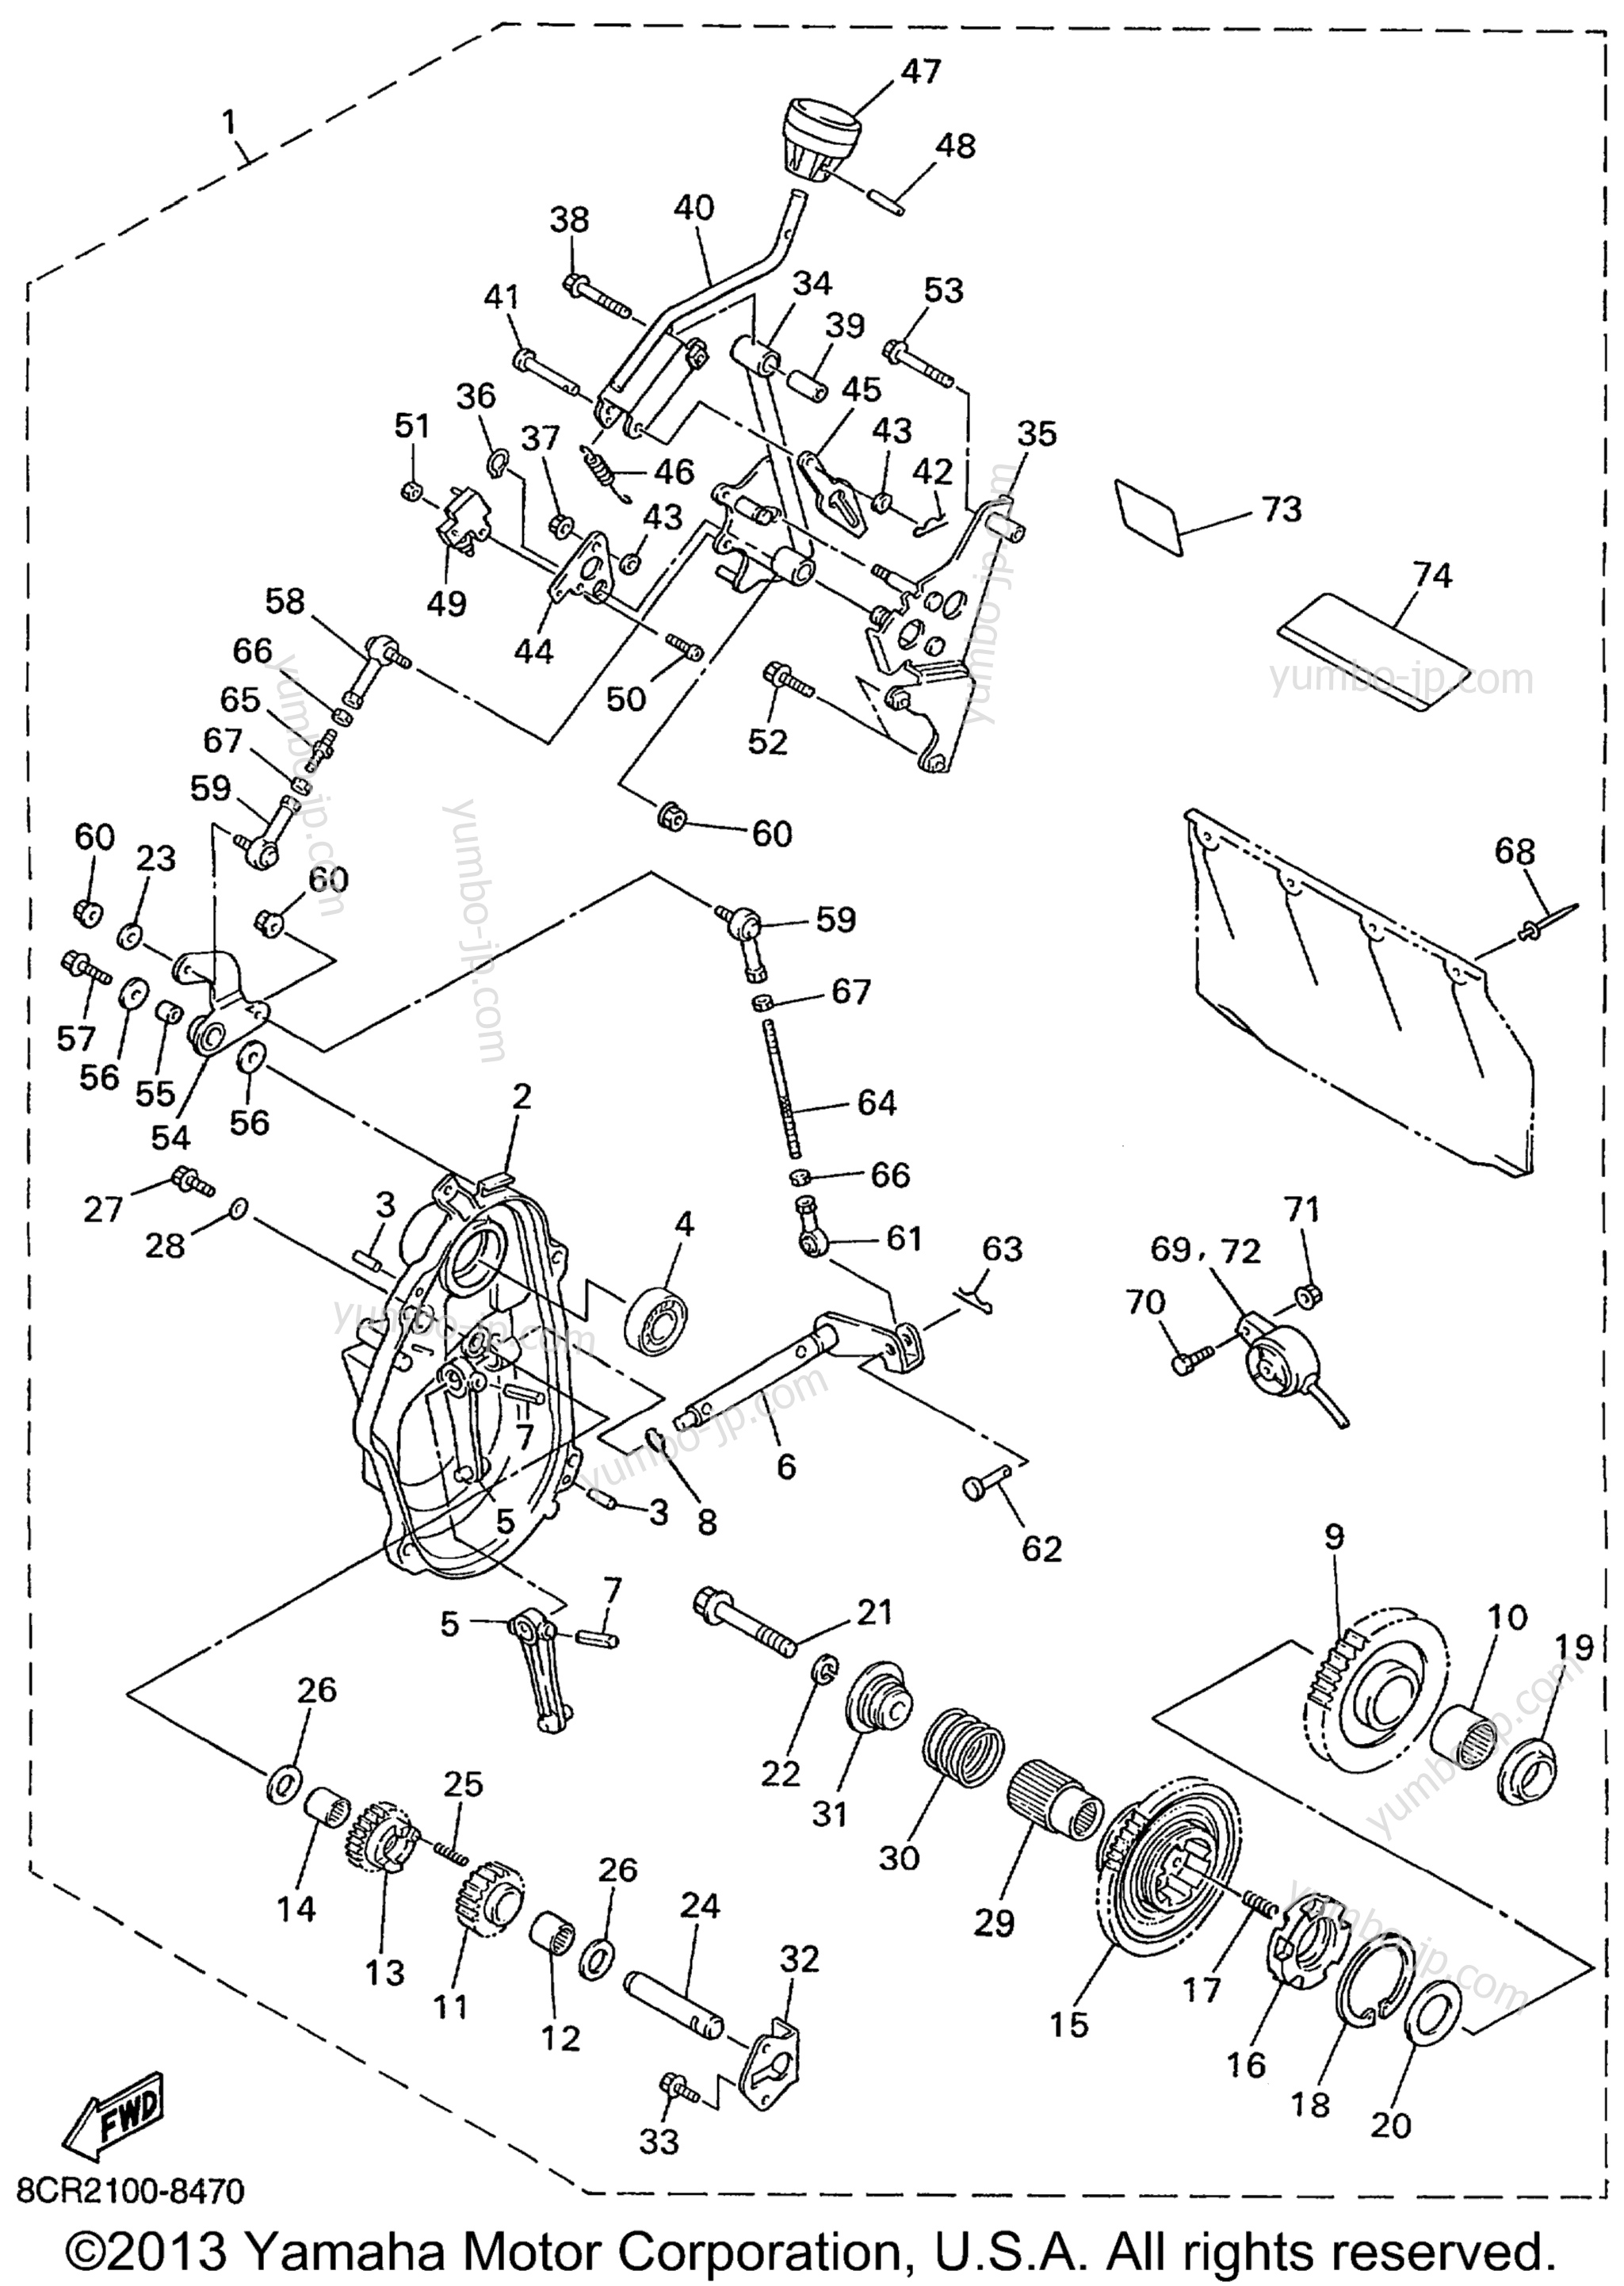 Alternate Reverse Gear Kit for snowmobiles YAMAHA VMAX 700 SX (VX700SXBC) 1999 year